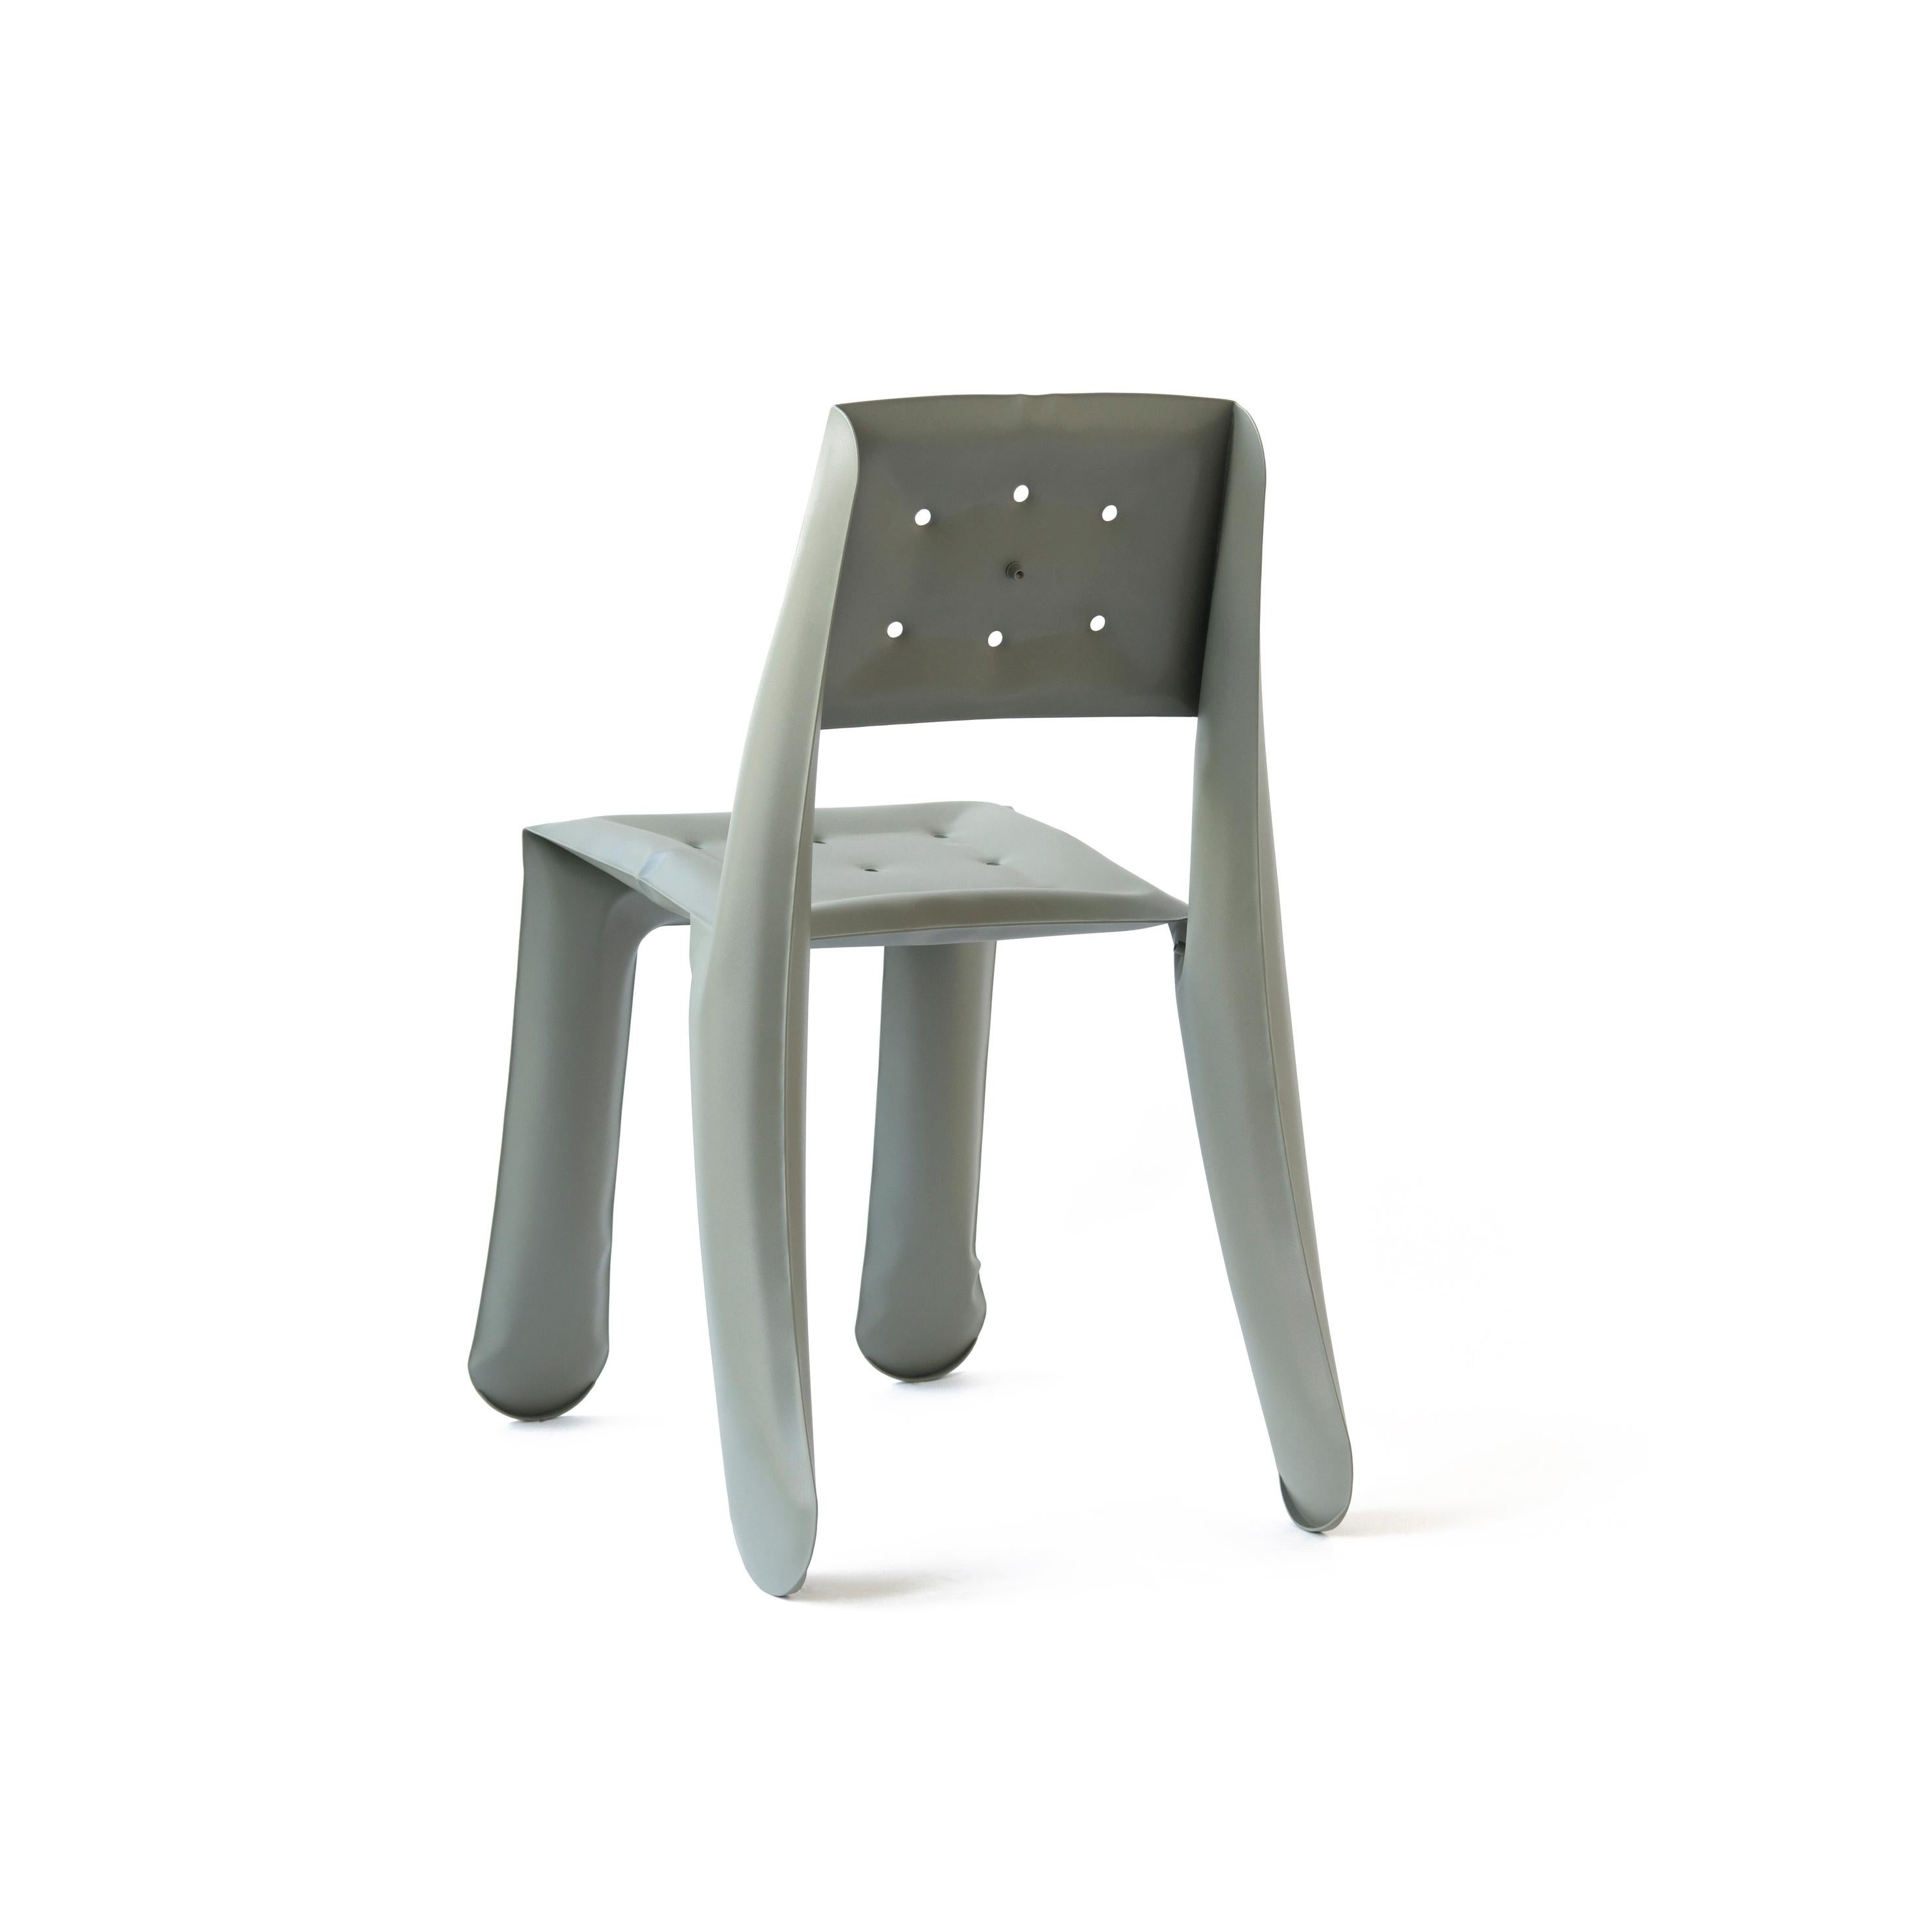 Organique Chaise sculpturale 0,5 en aluminium blanc mat Chippensteel de Zieta en vente